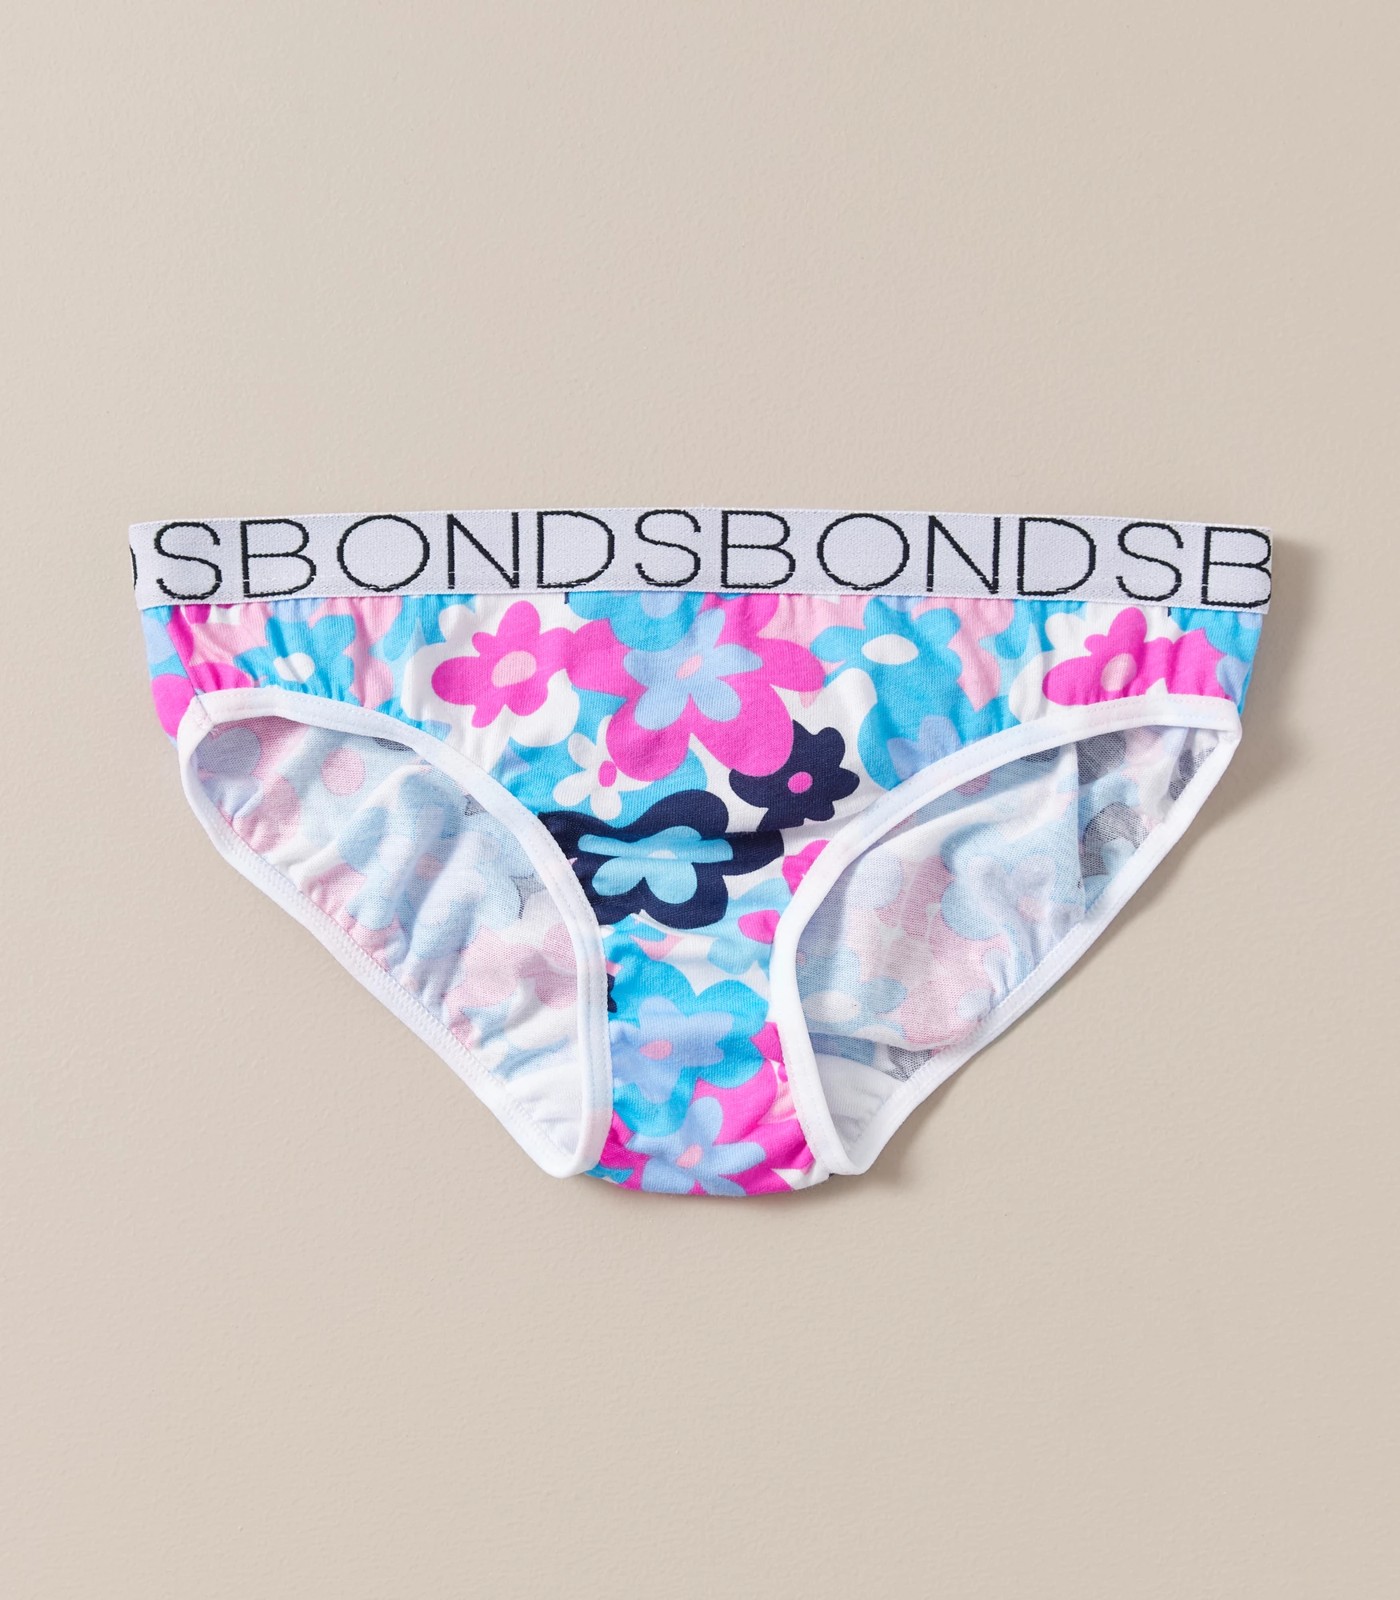 BONDS x Bluey Girls Bikini 4 Pack, UWUR4A